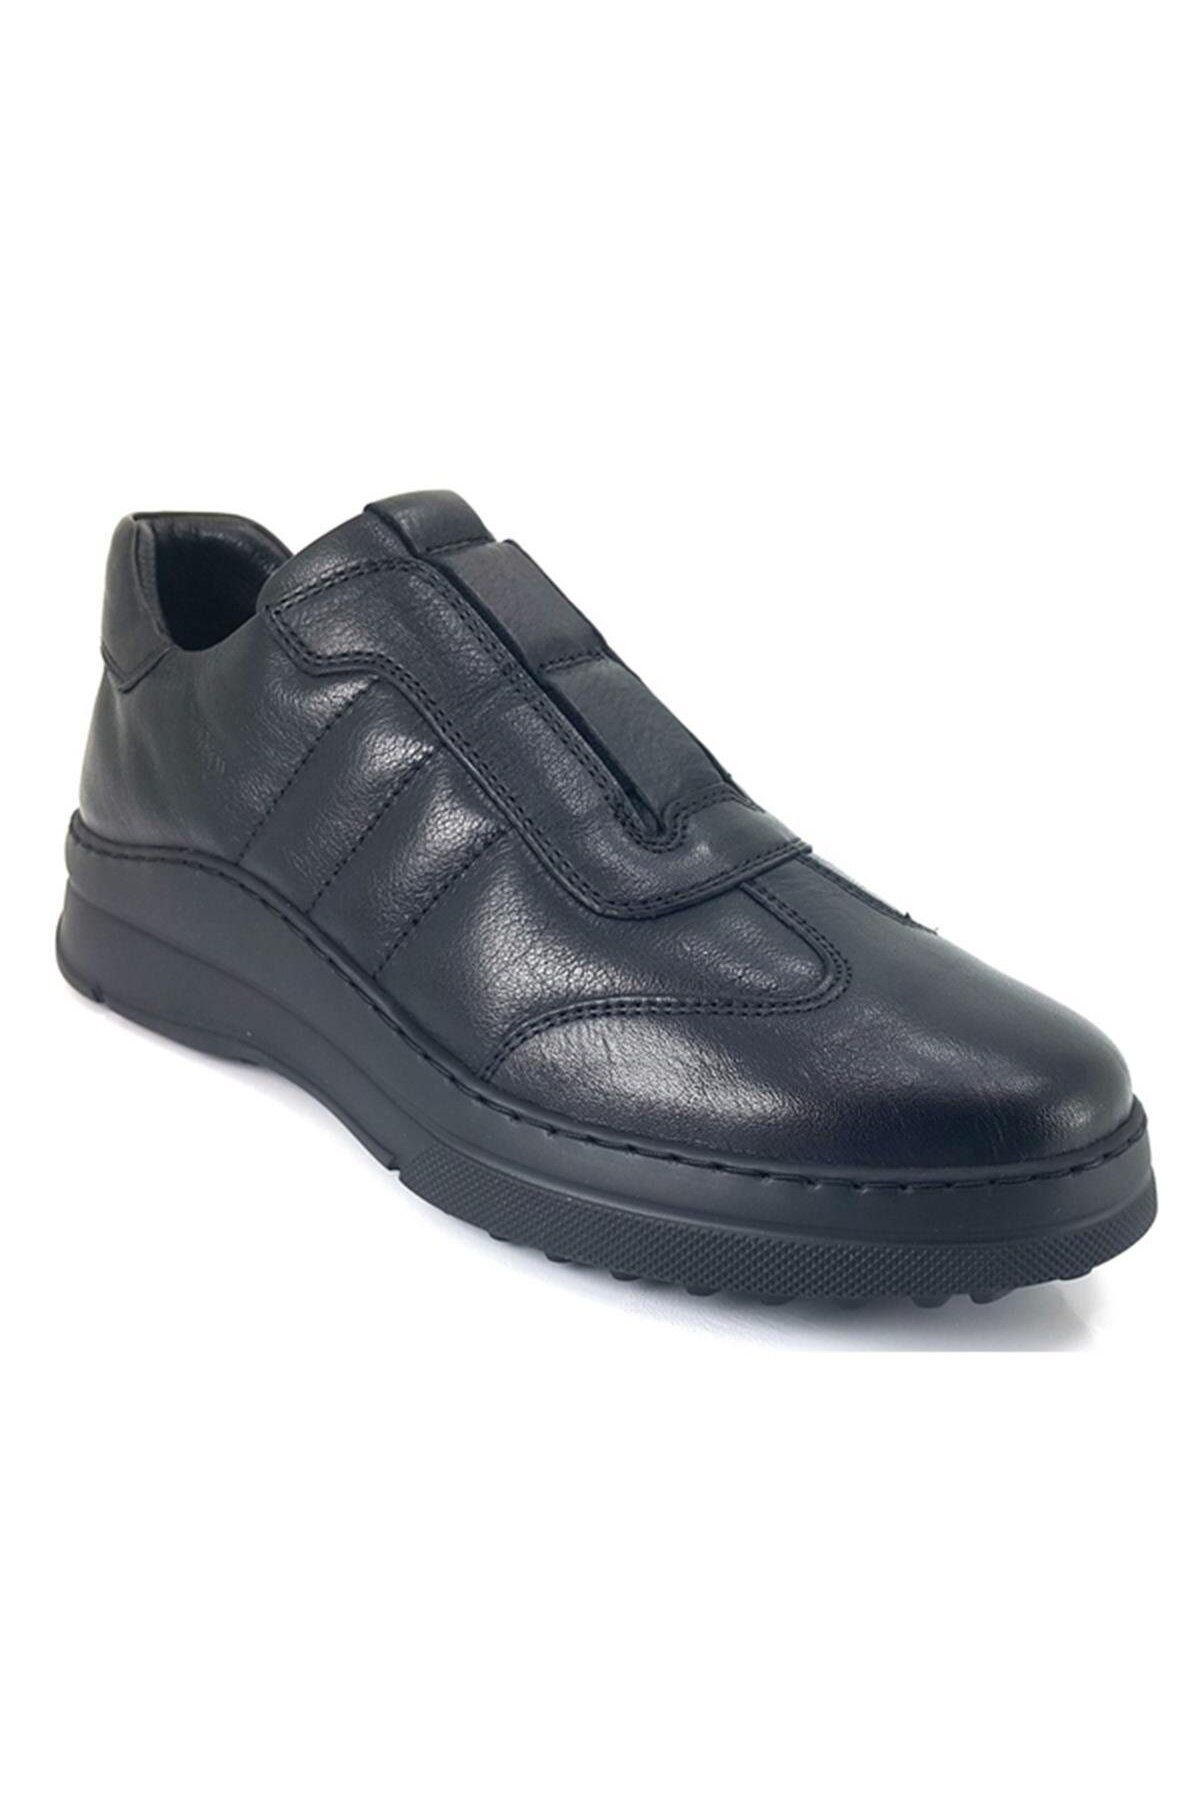 Libero 4508 22ka Günlük Ayakkabı - Siyah